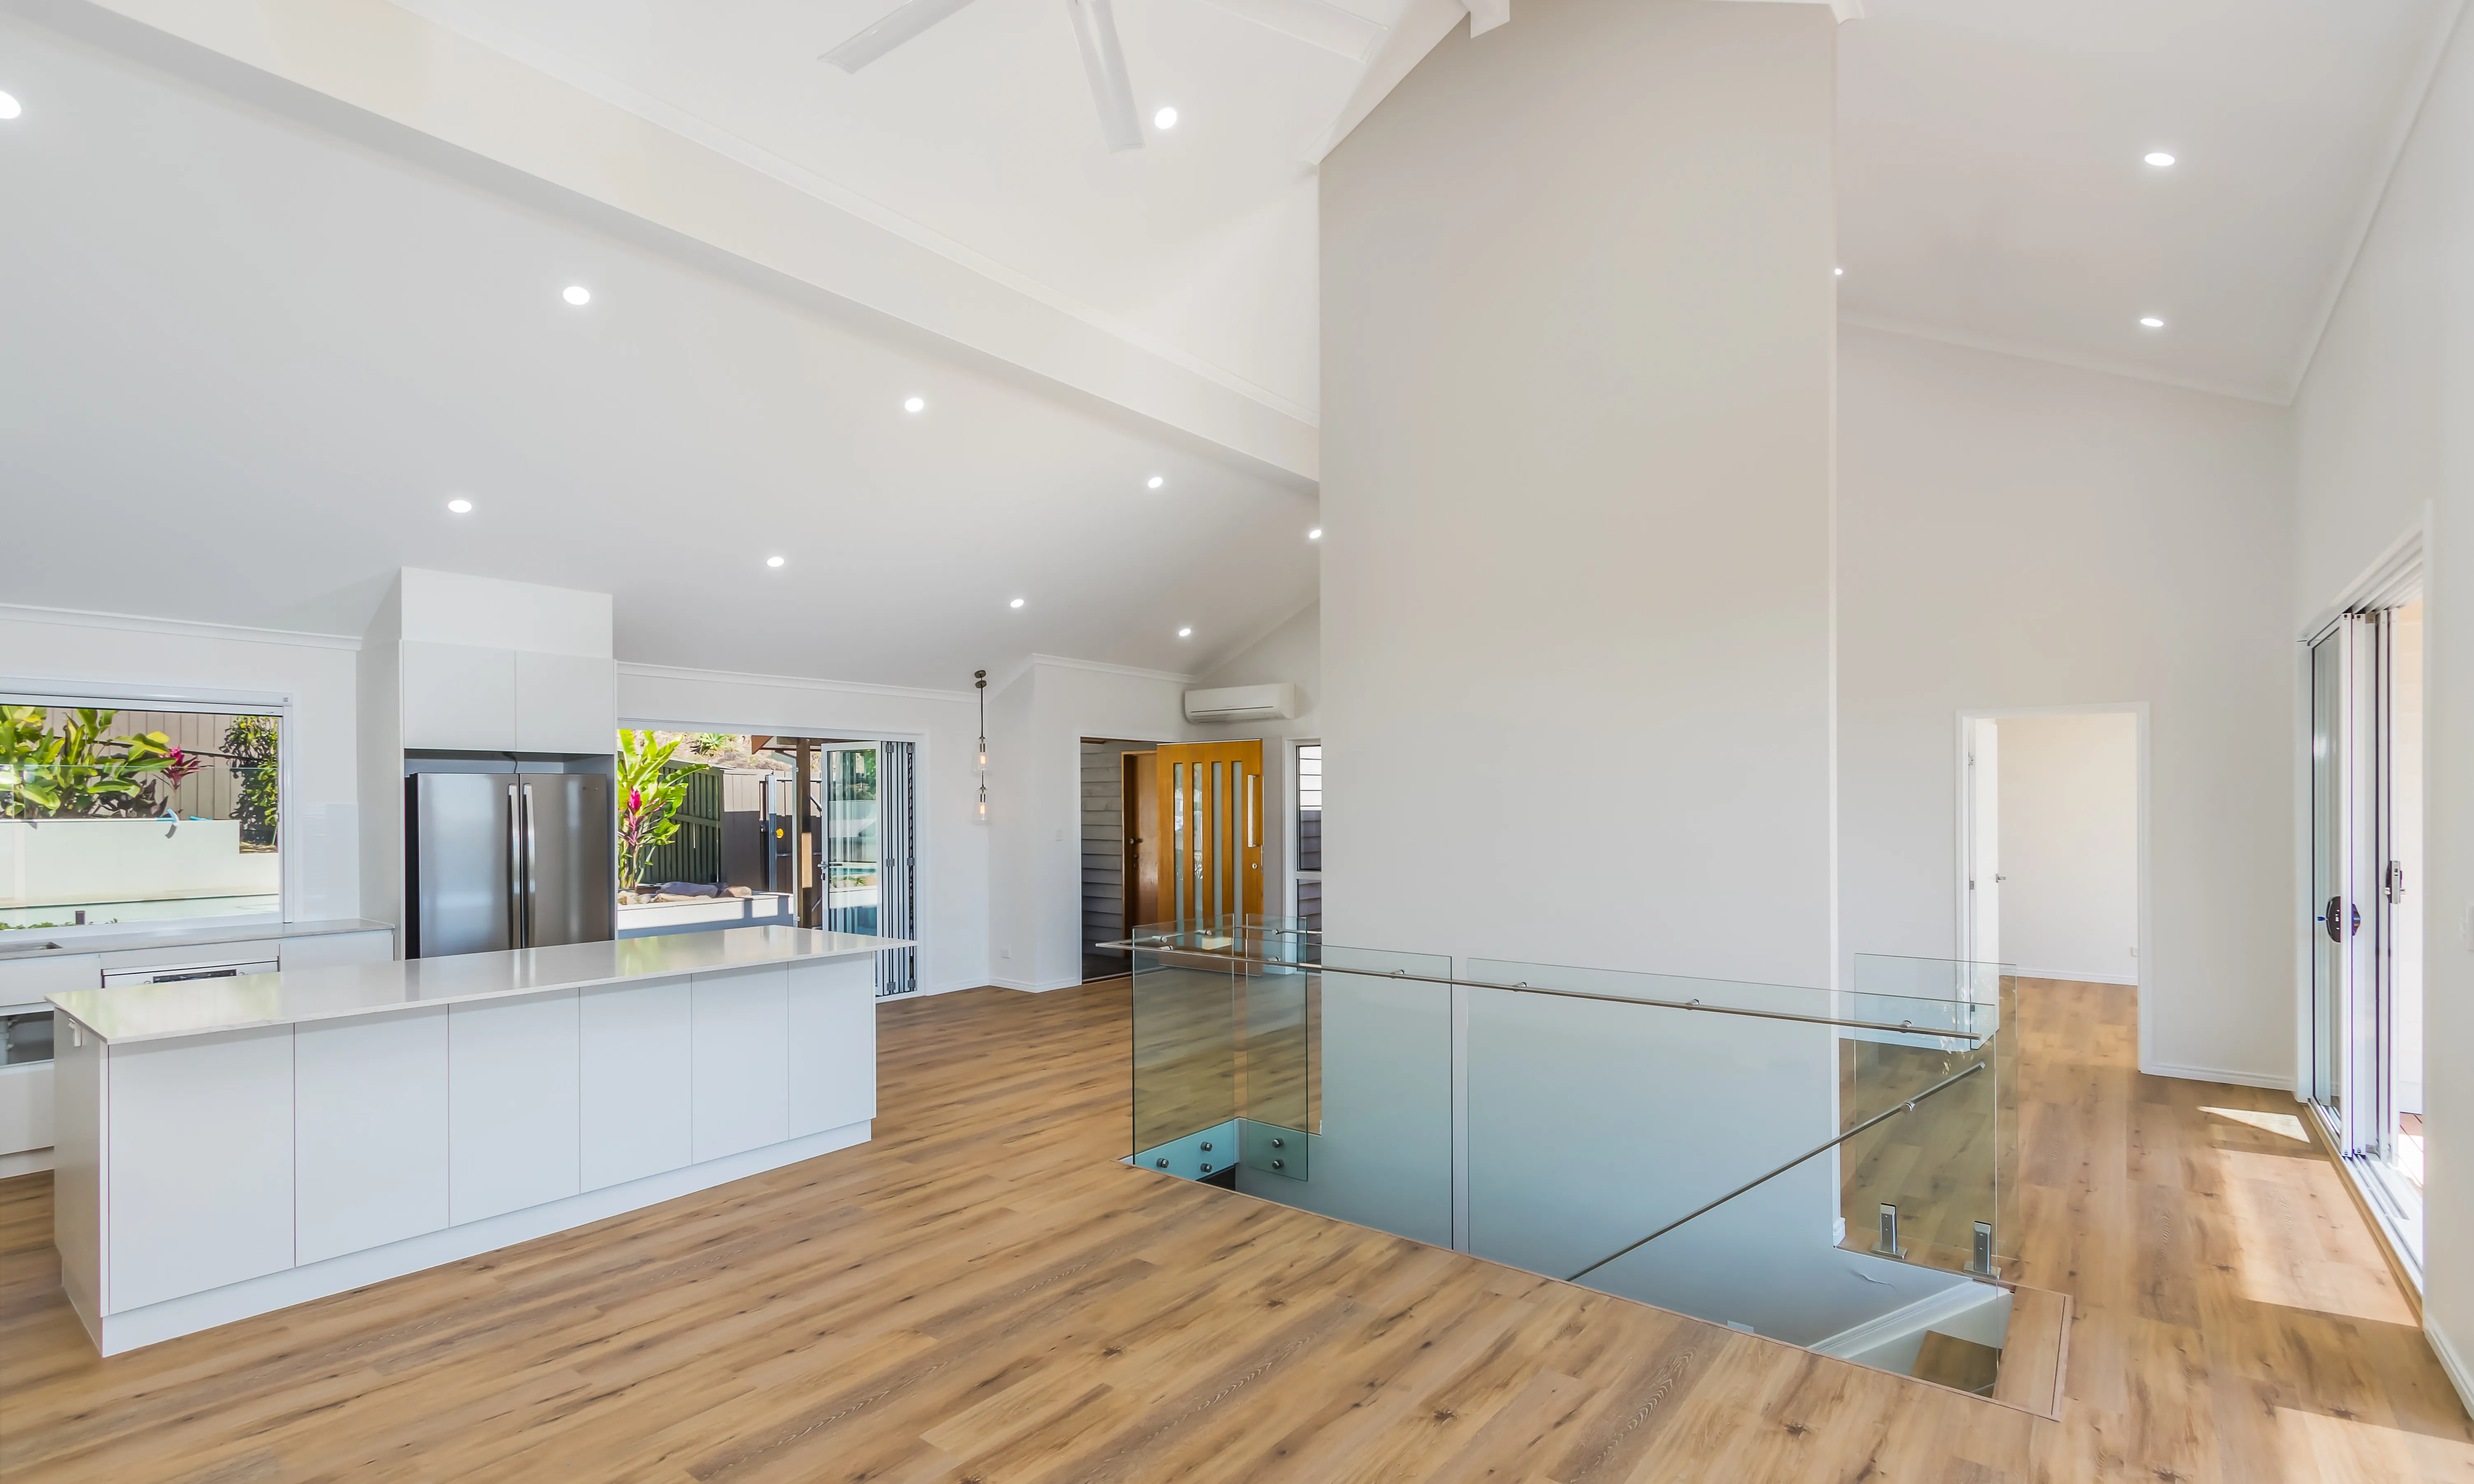 Kitchen design-bifold doors-open plan living-timber floors-white cabinets